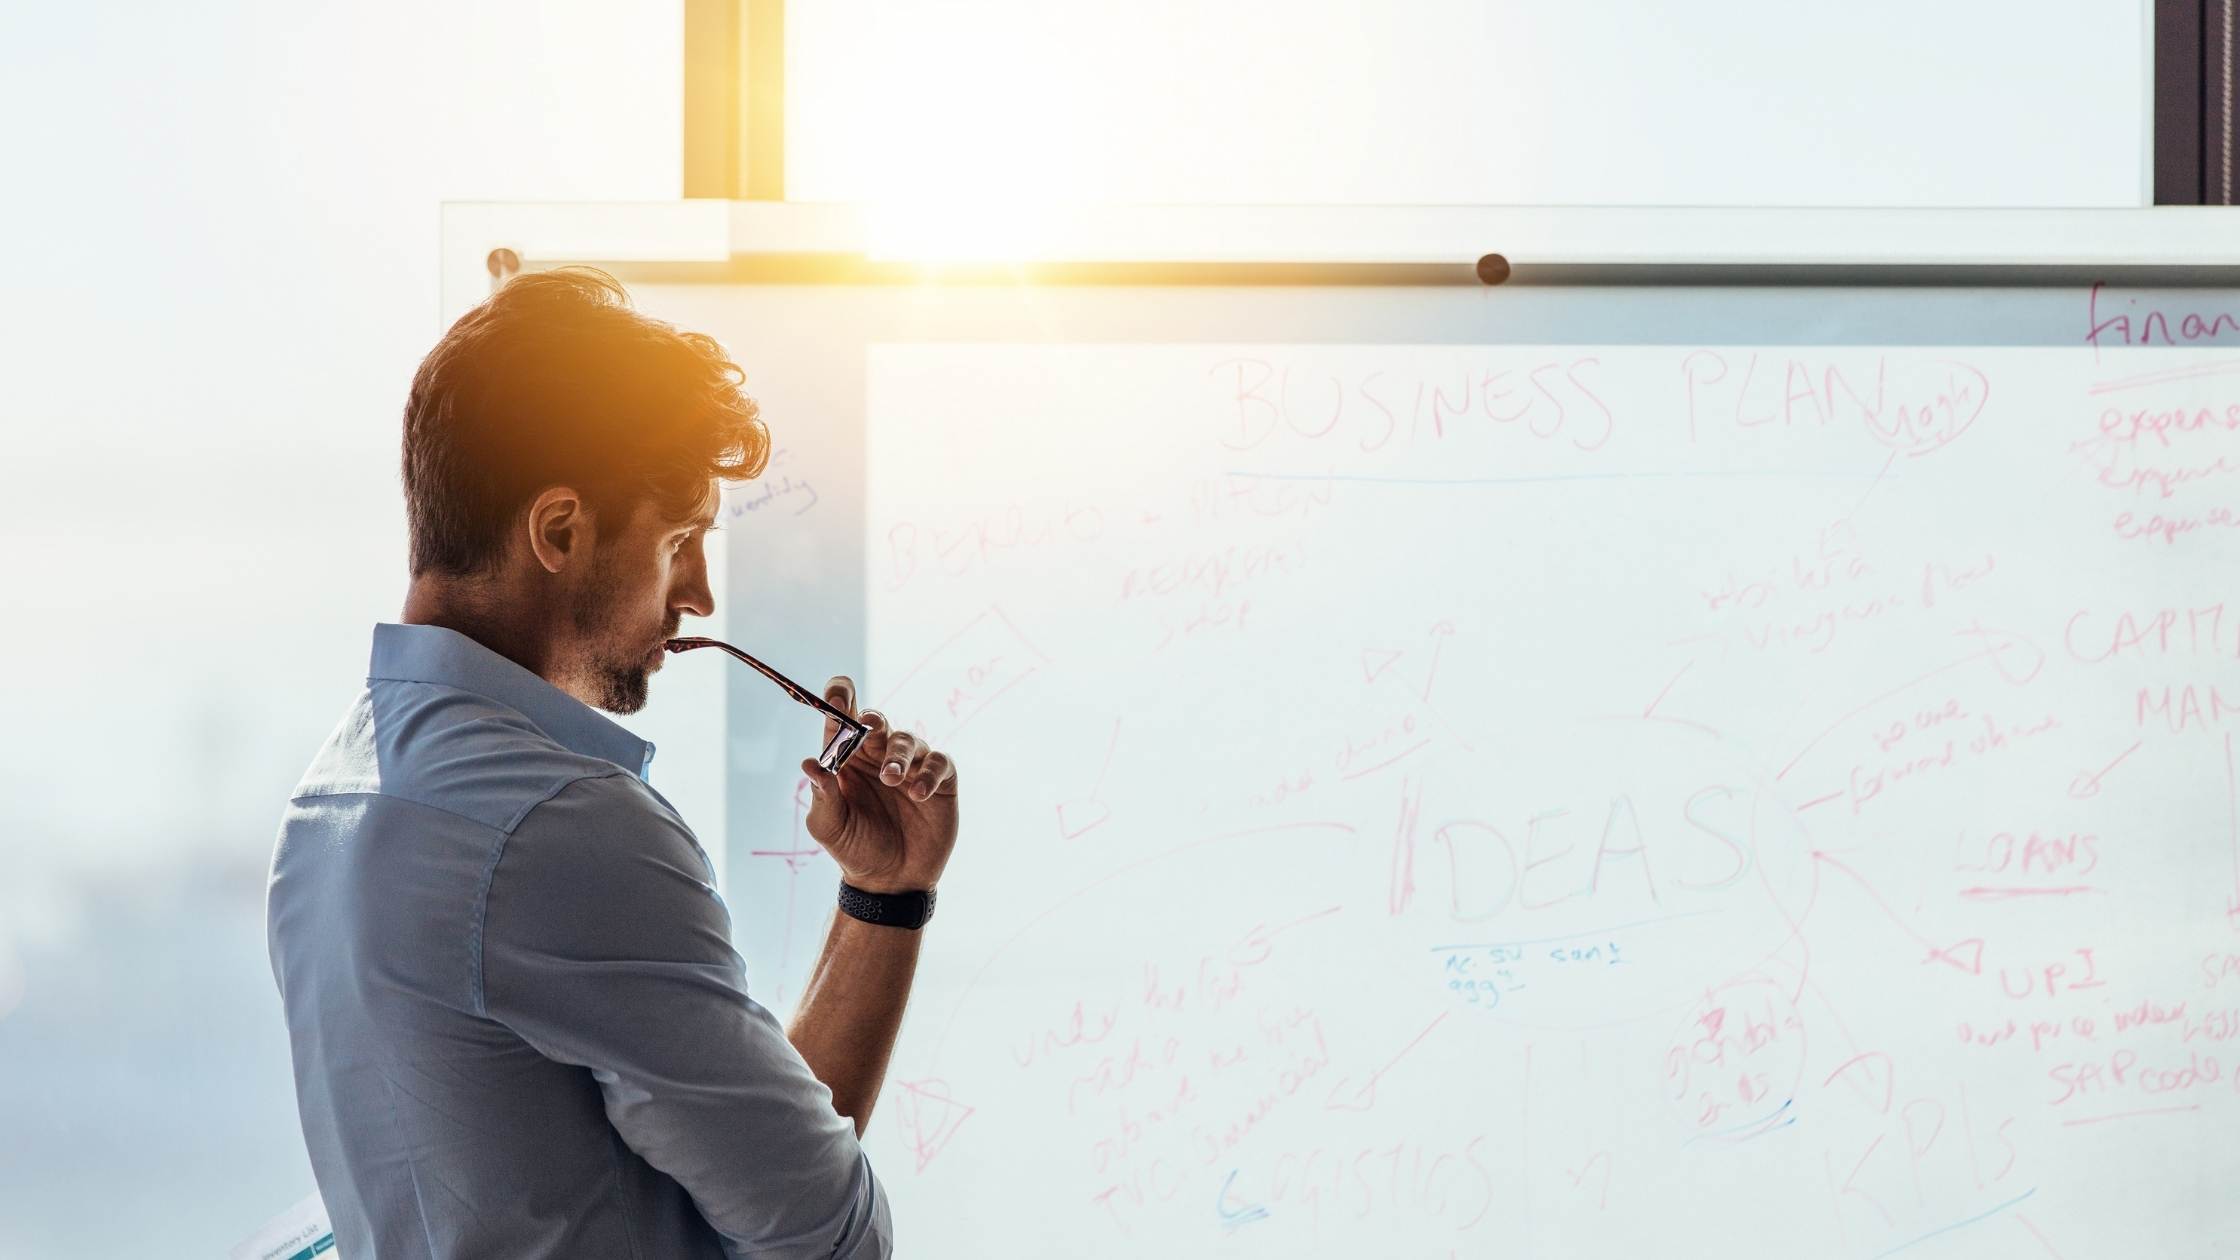 Entrepreneur putting down business ideas on white board